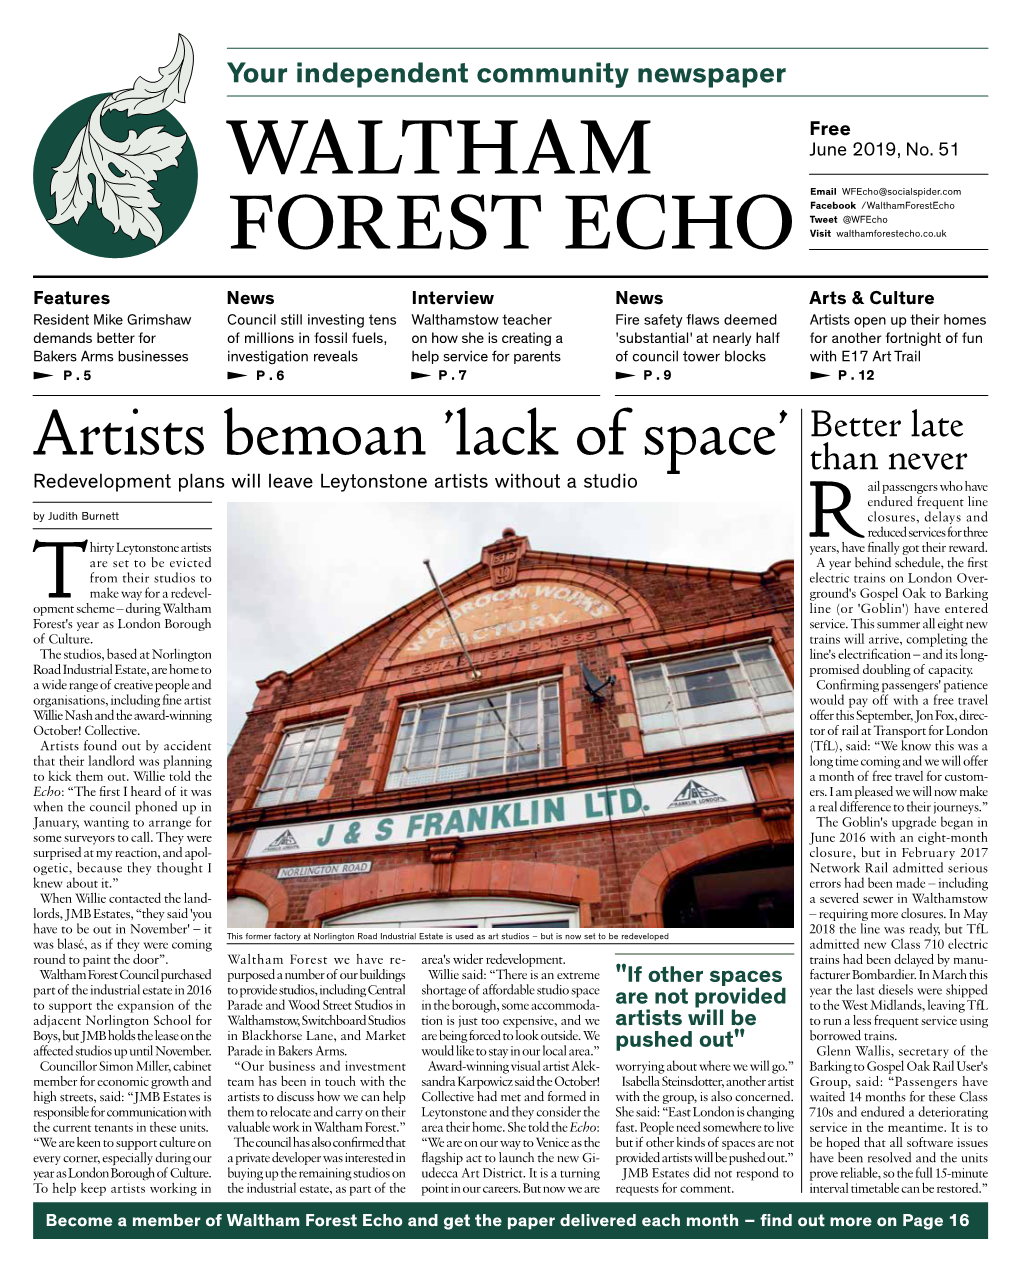 Waltham Forest Echo #51, June 2019